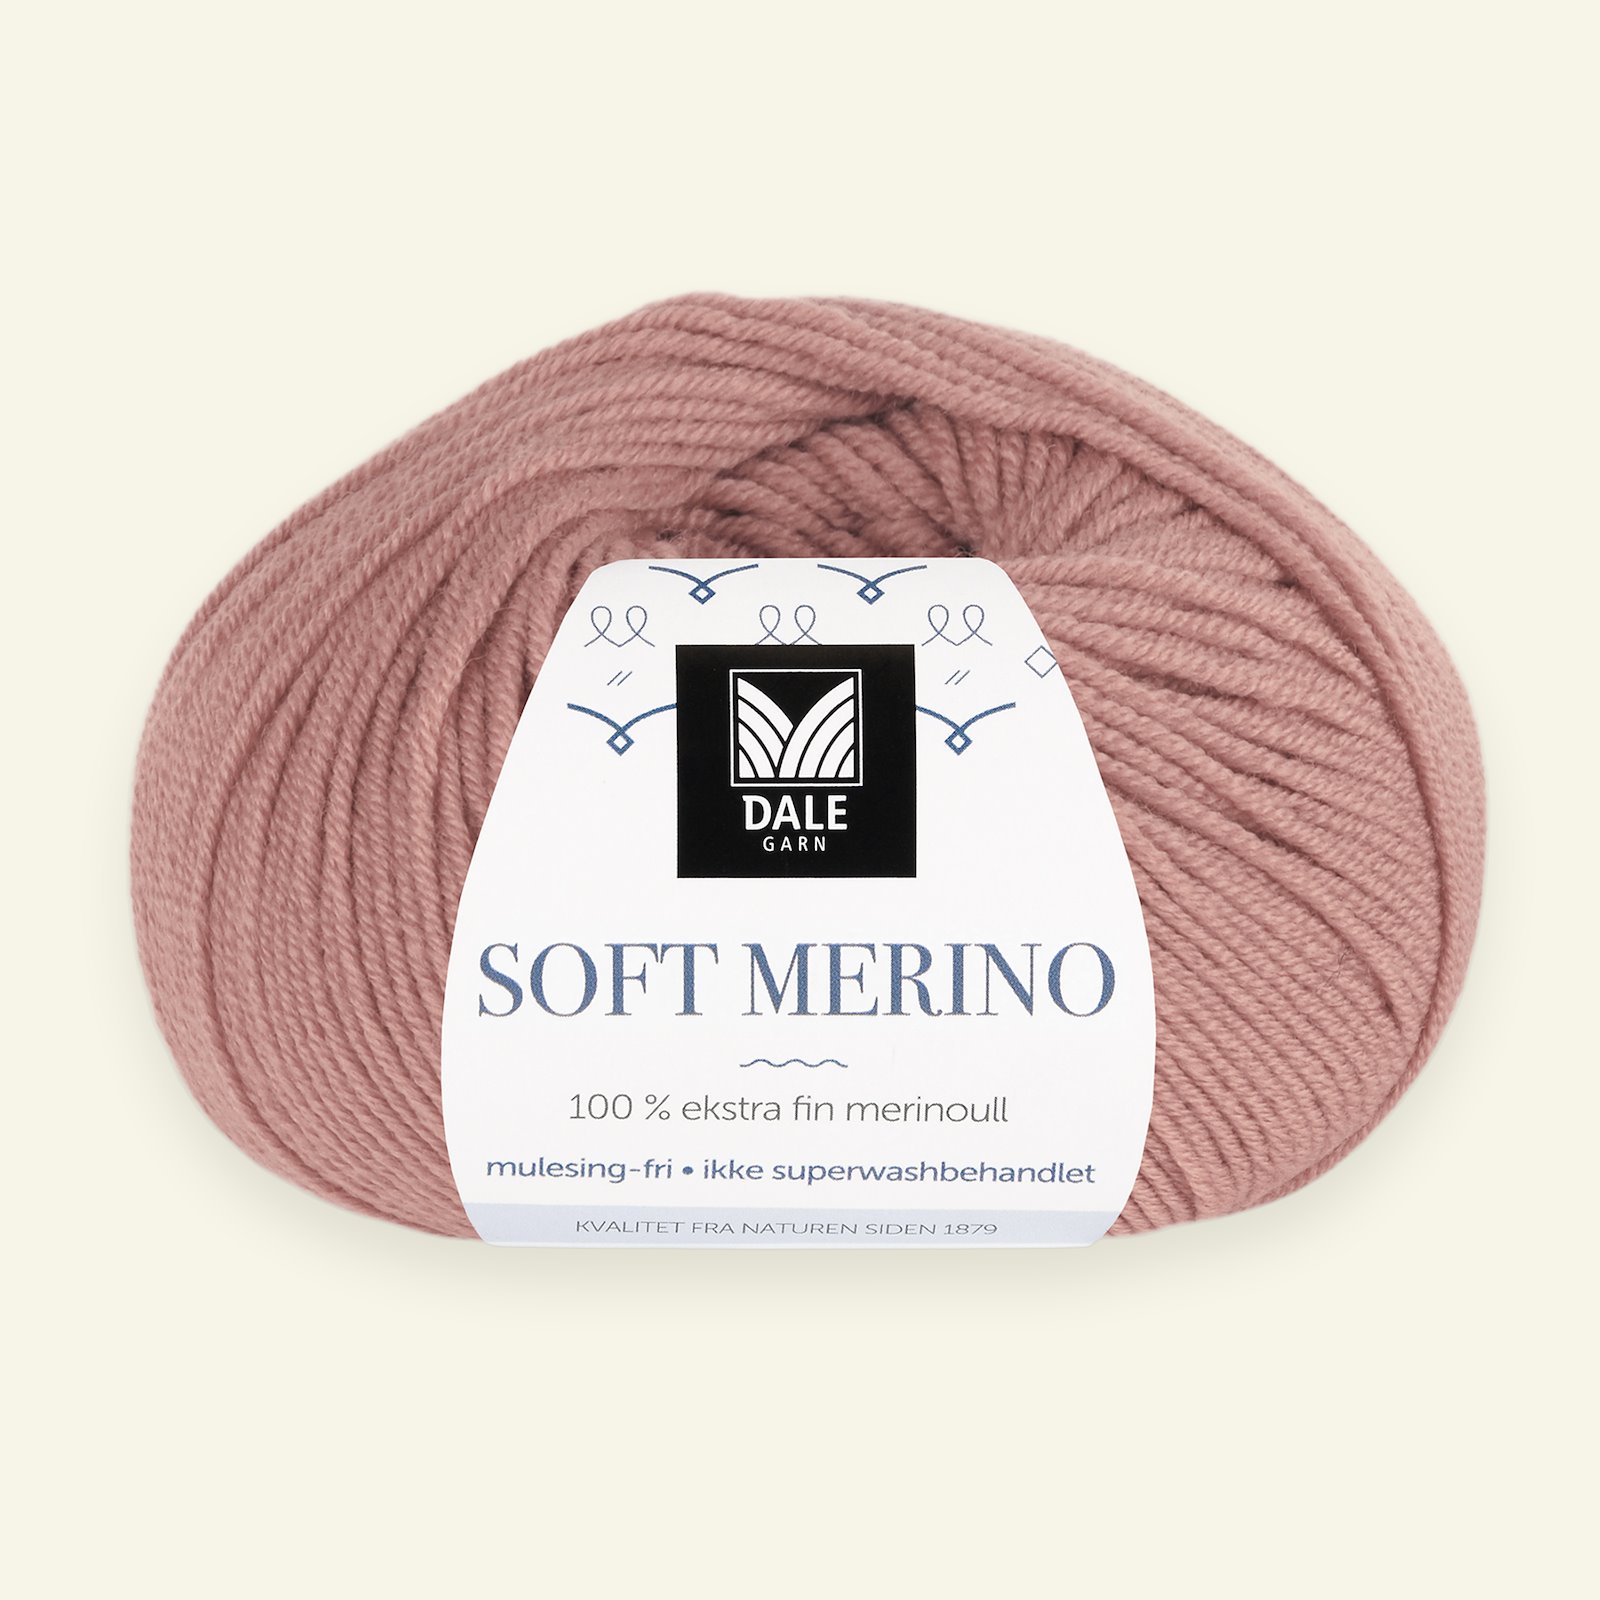 Dale Garn, 100% Extrafeine Merino-Wolle "Soft Merino", altrosa 90000361_pack